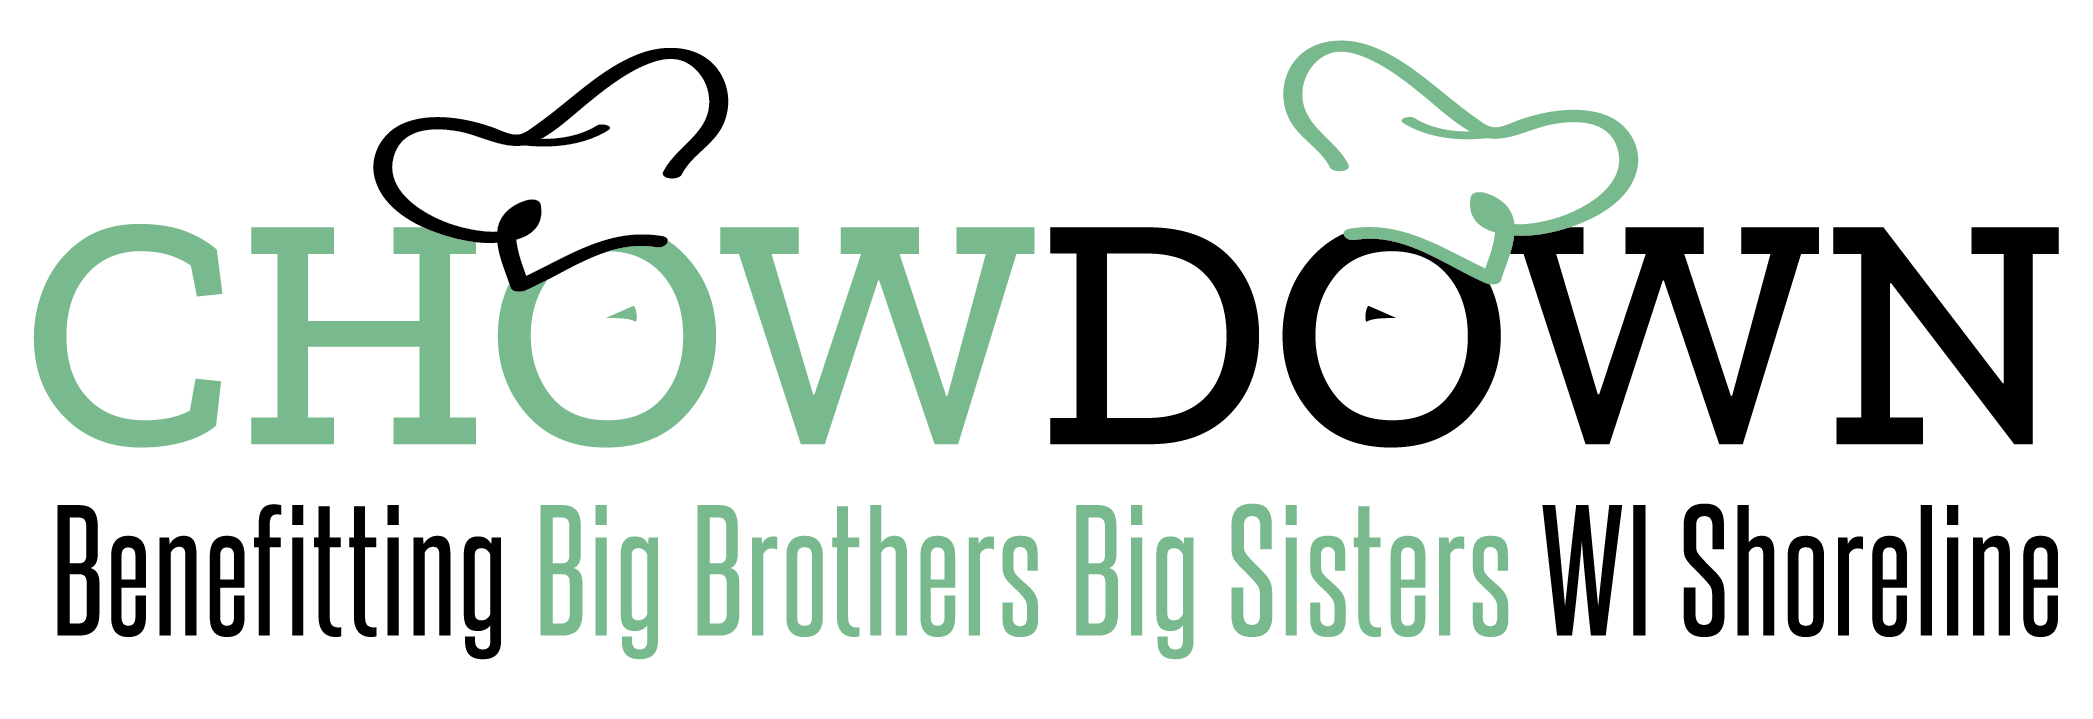 Big Brothers Big Sisters of WI Shoreline